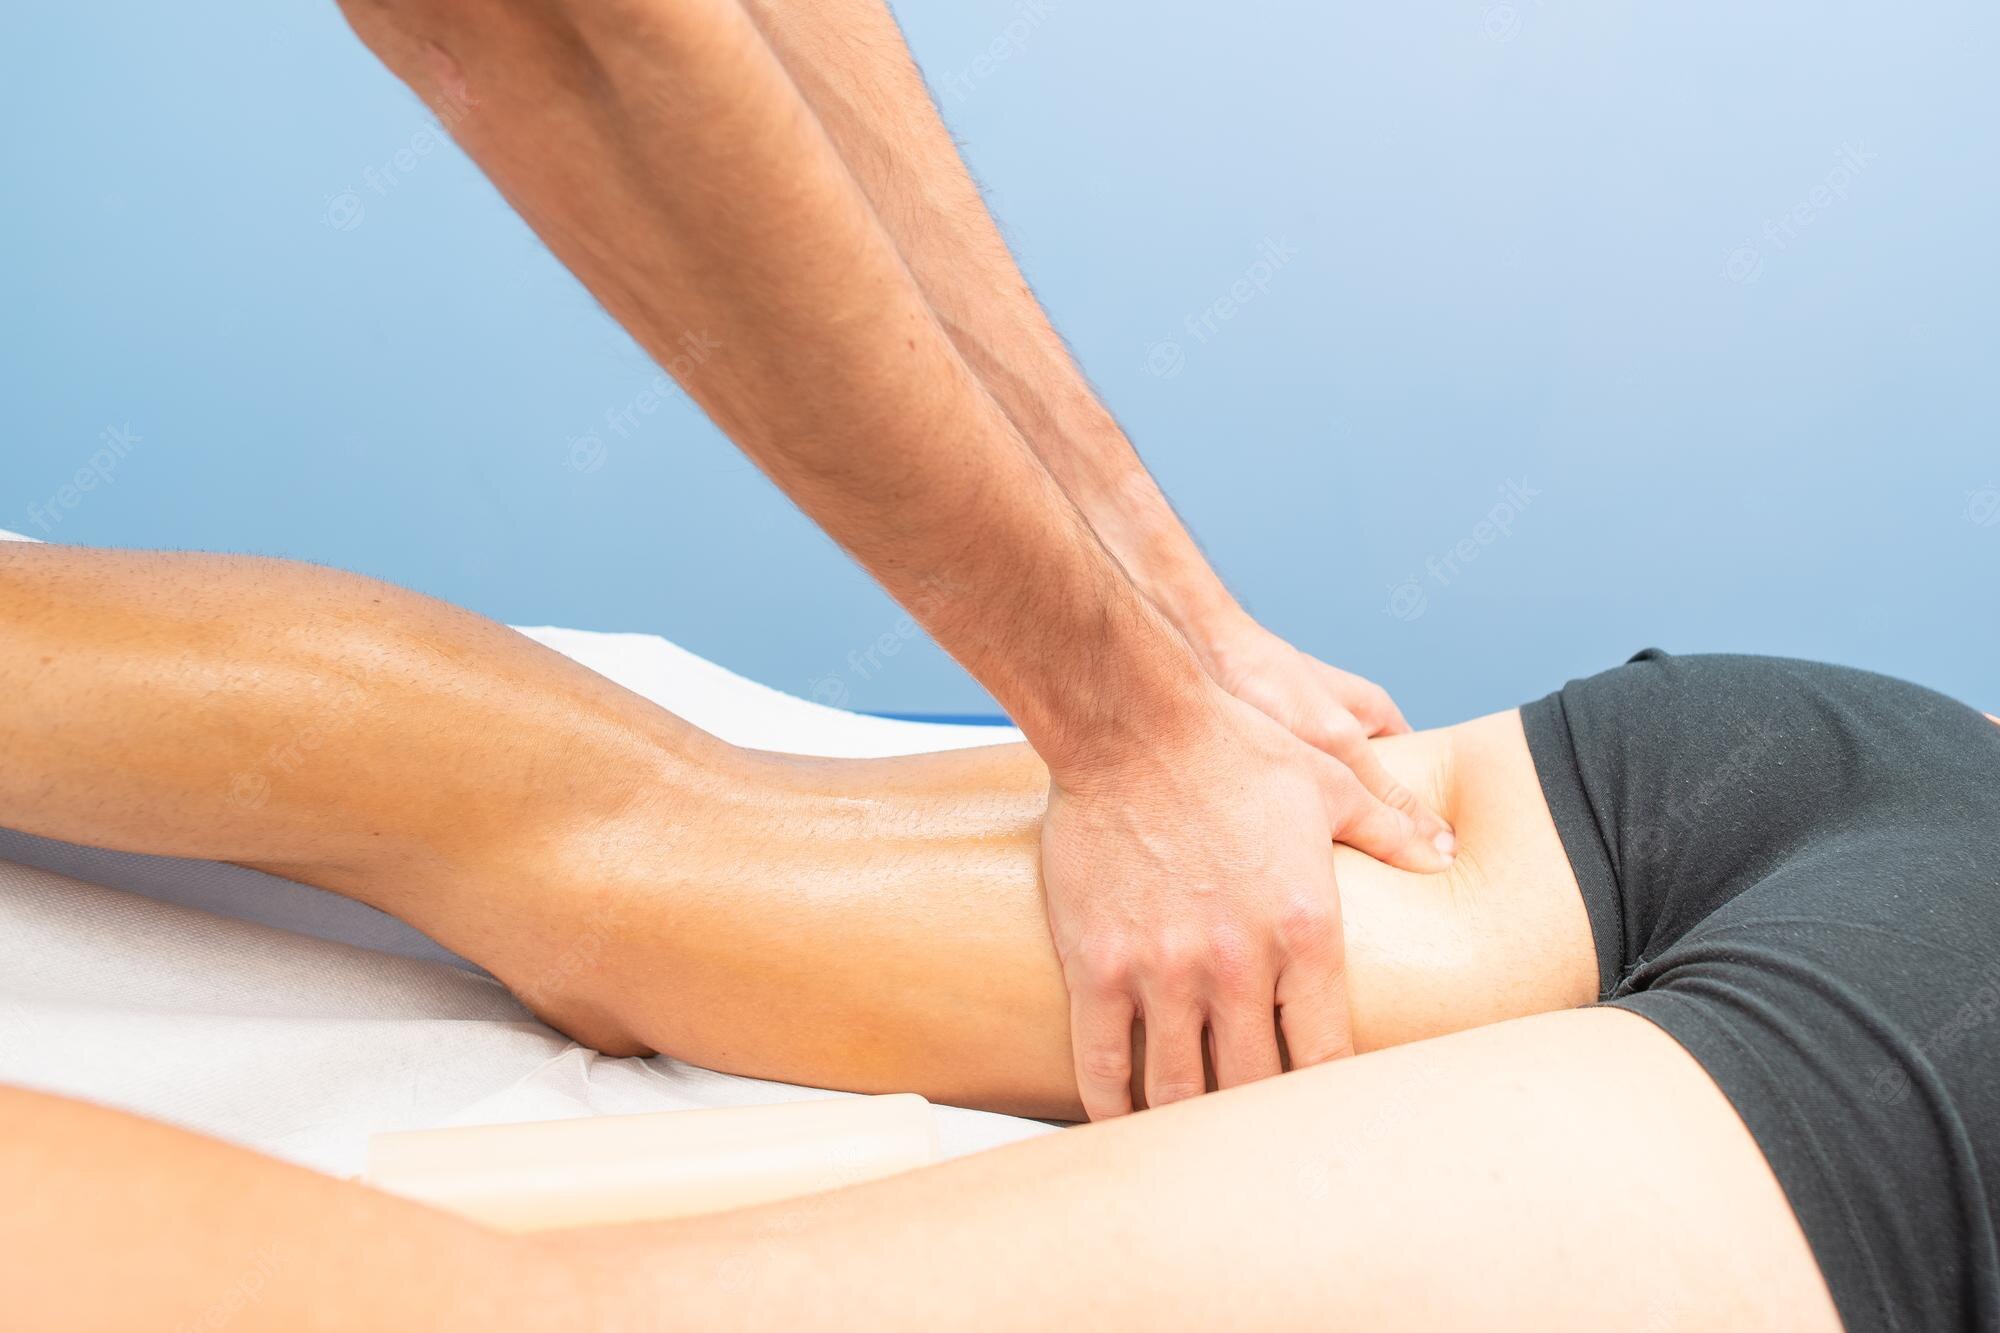 massage-thigh-physiotherapist-athlete